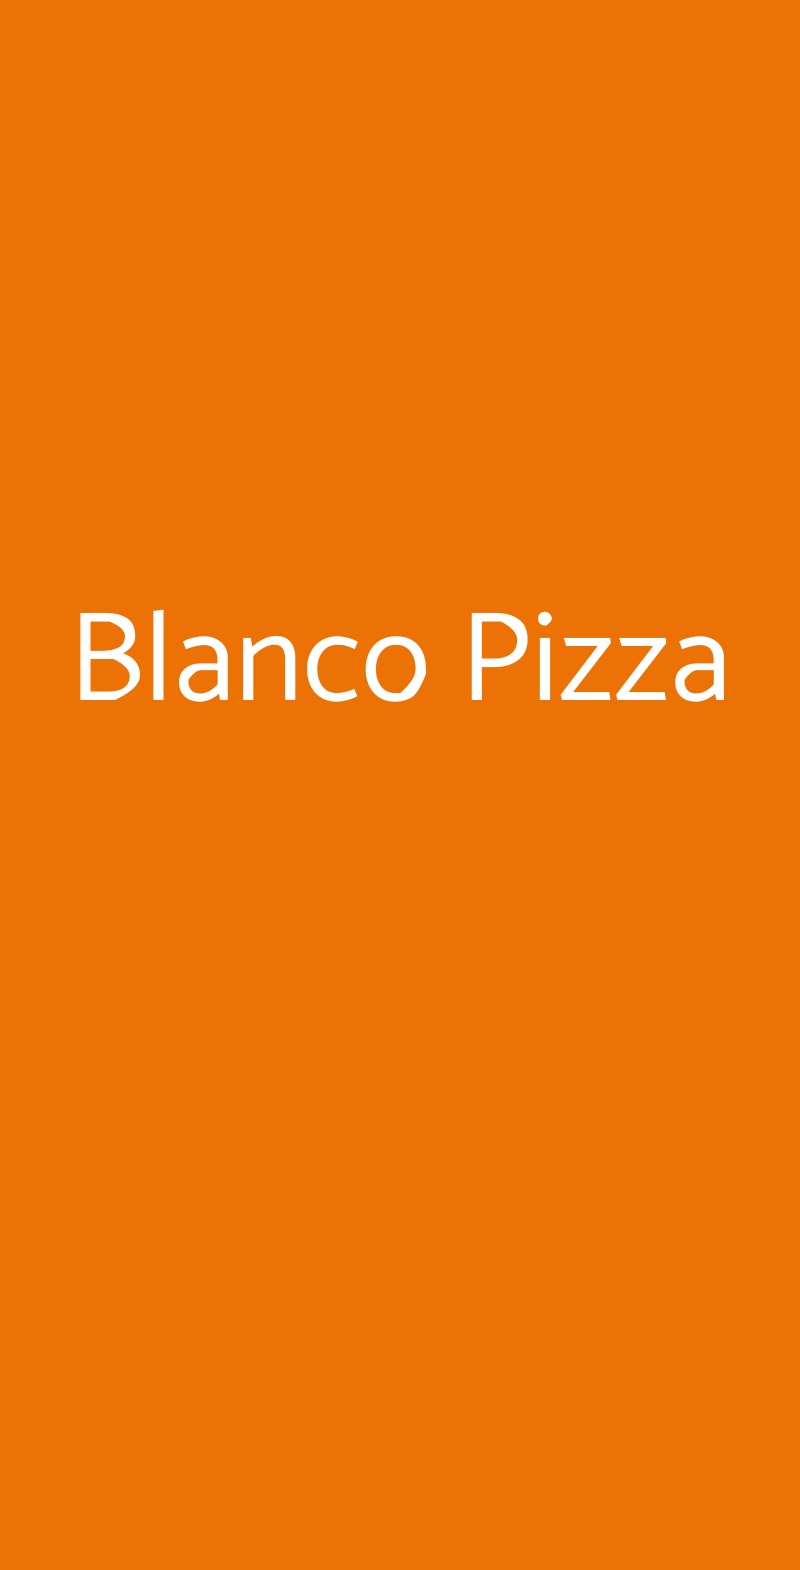 Blanco Pizza Settimo Torinese menù 1 pagina